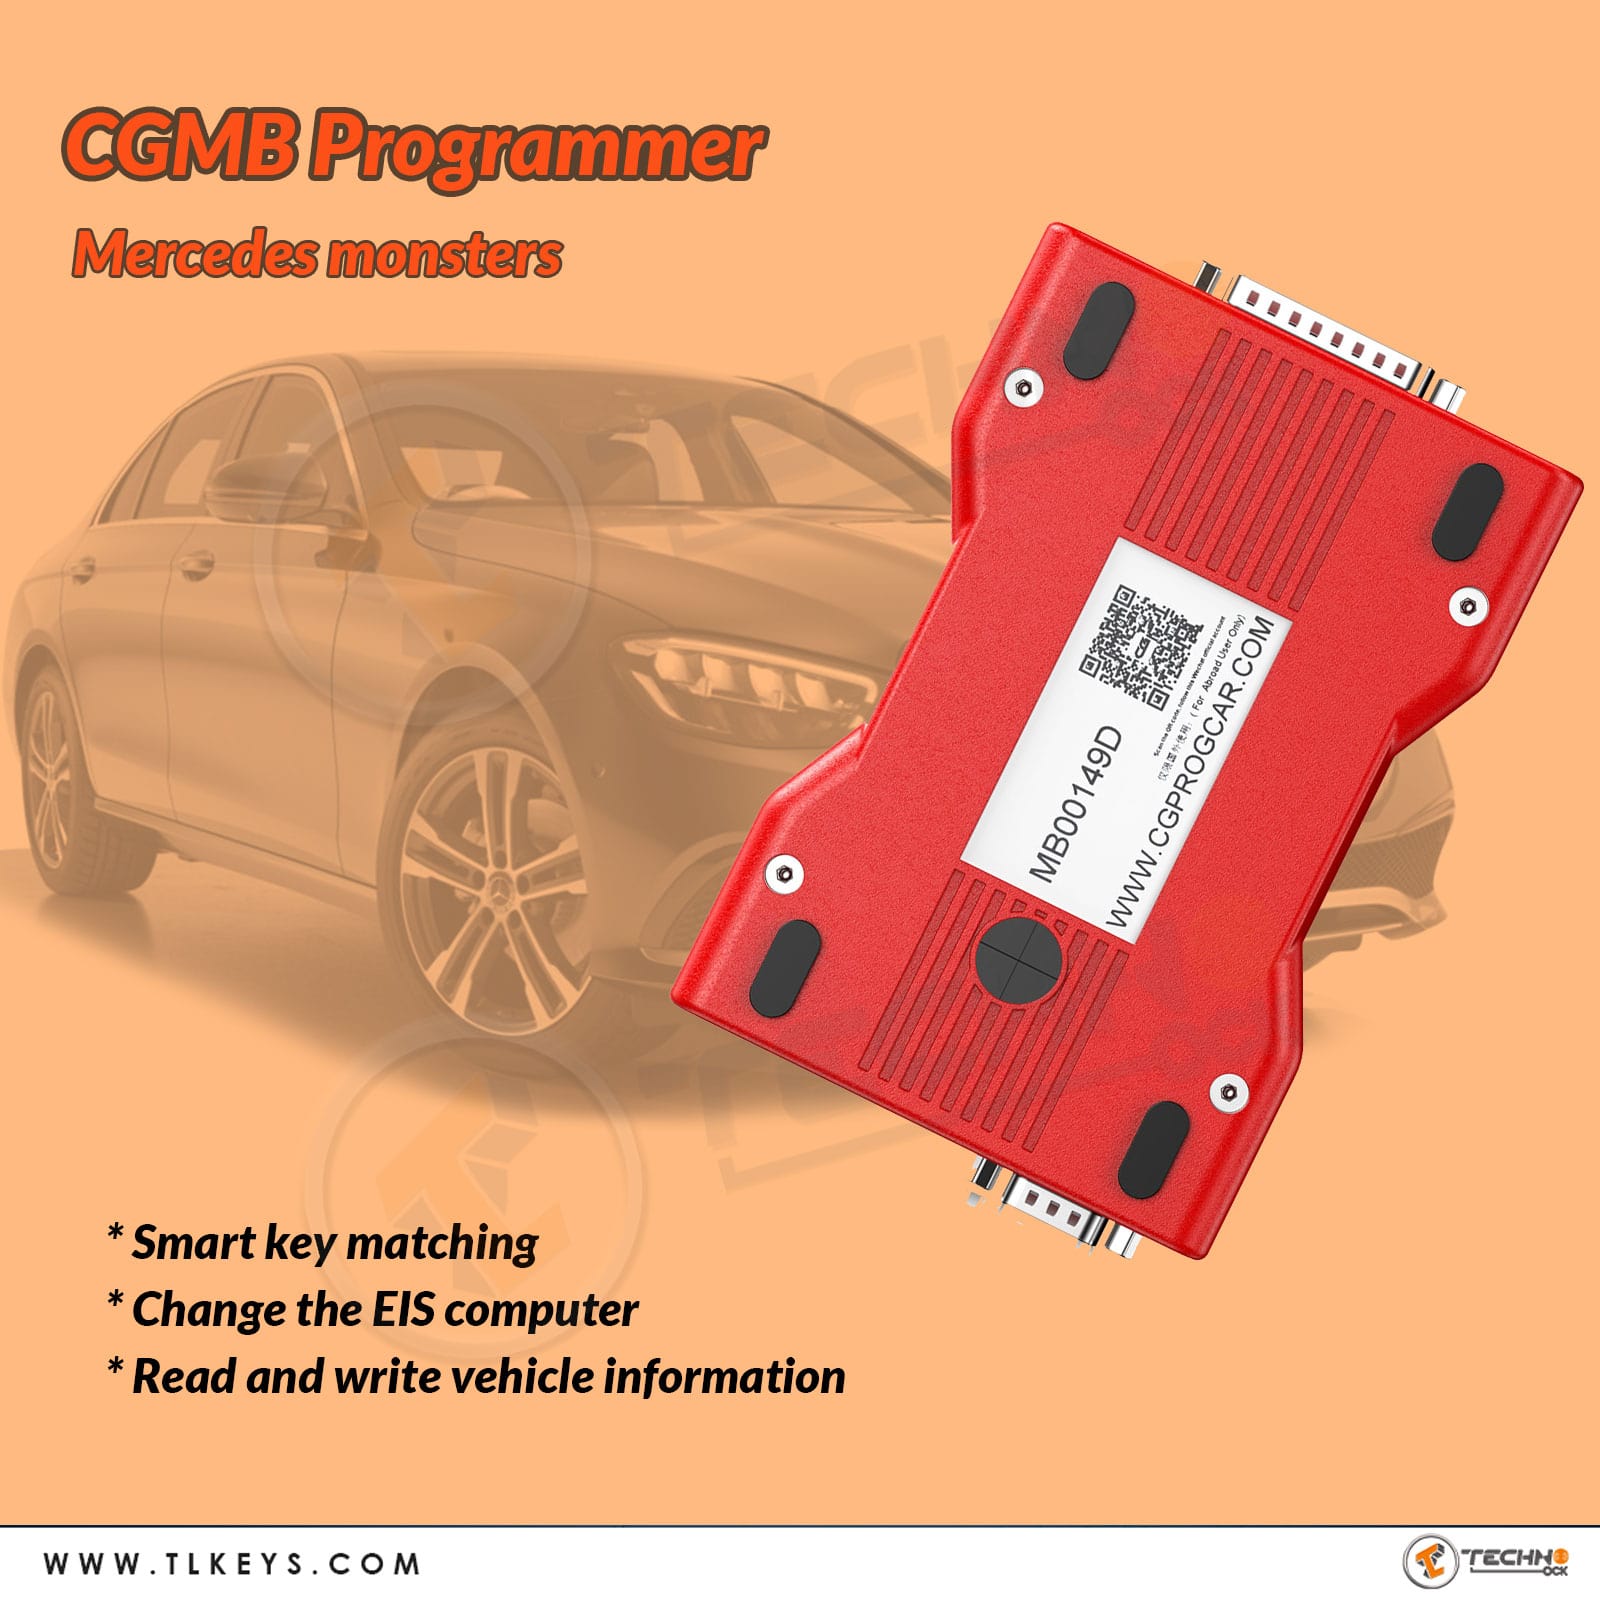 CGMB Programmer Mercedes monsters